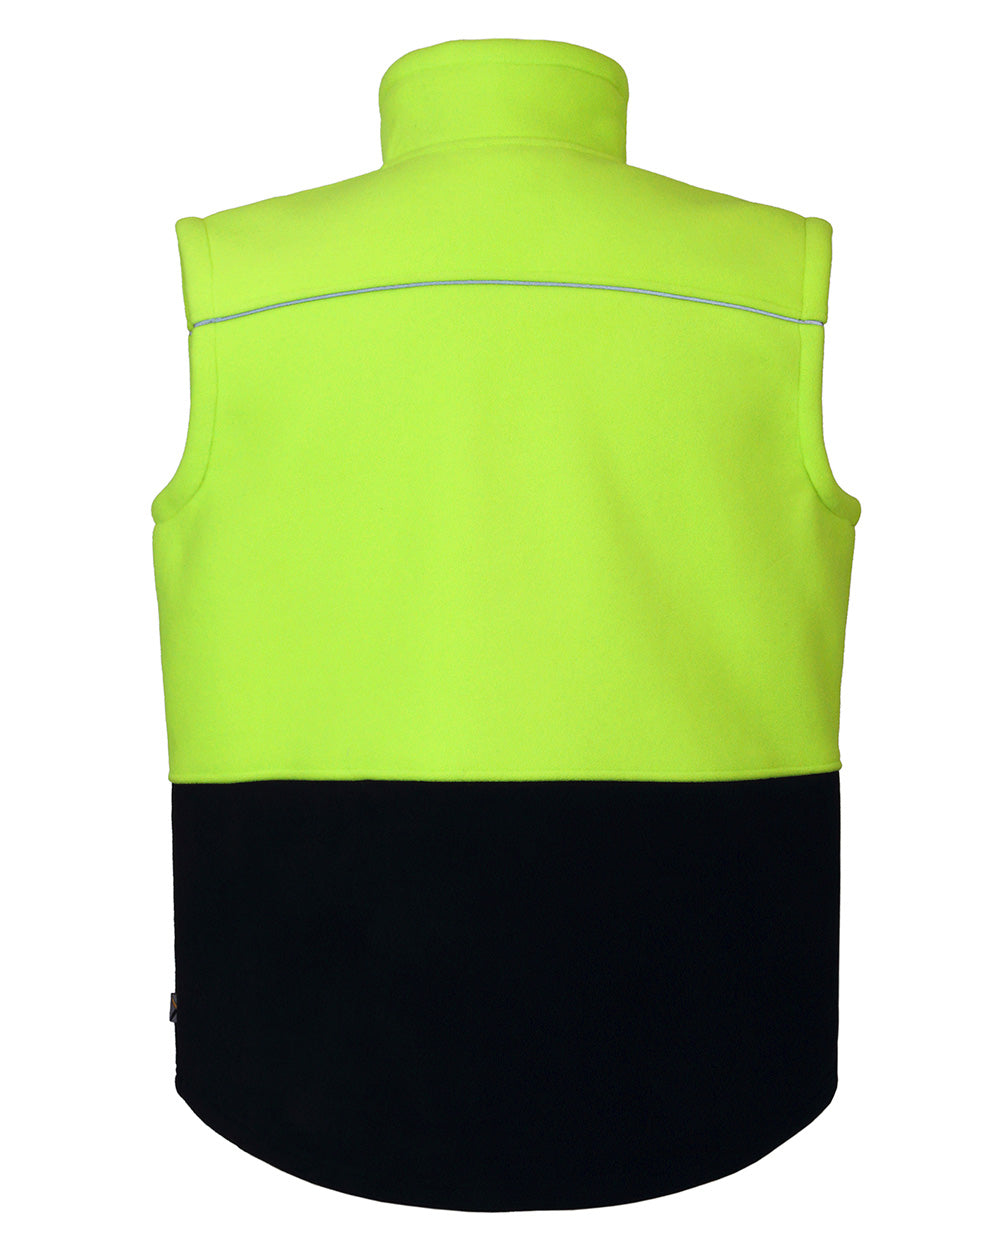 Maguire Vest in Fluoro Yellow & Navy